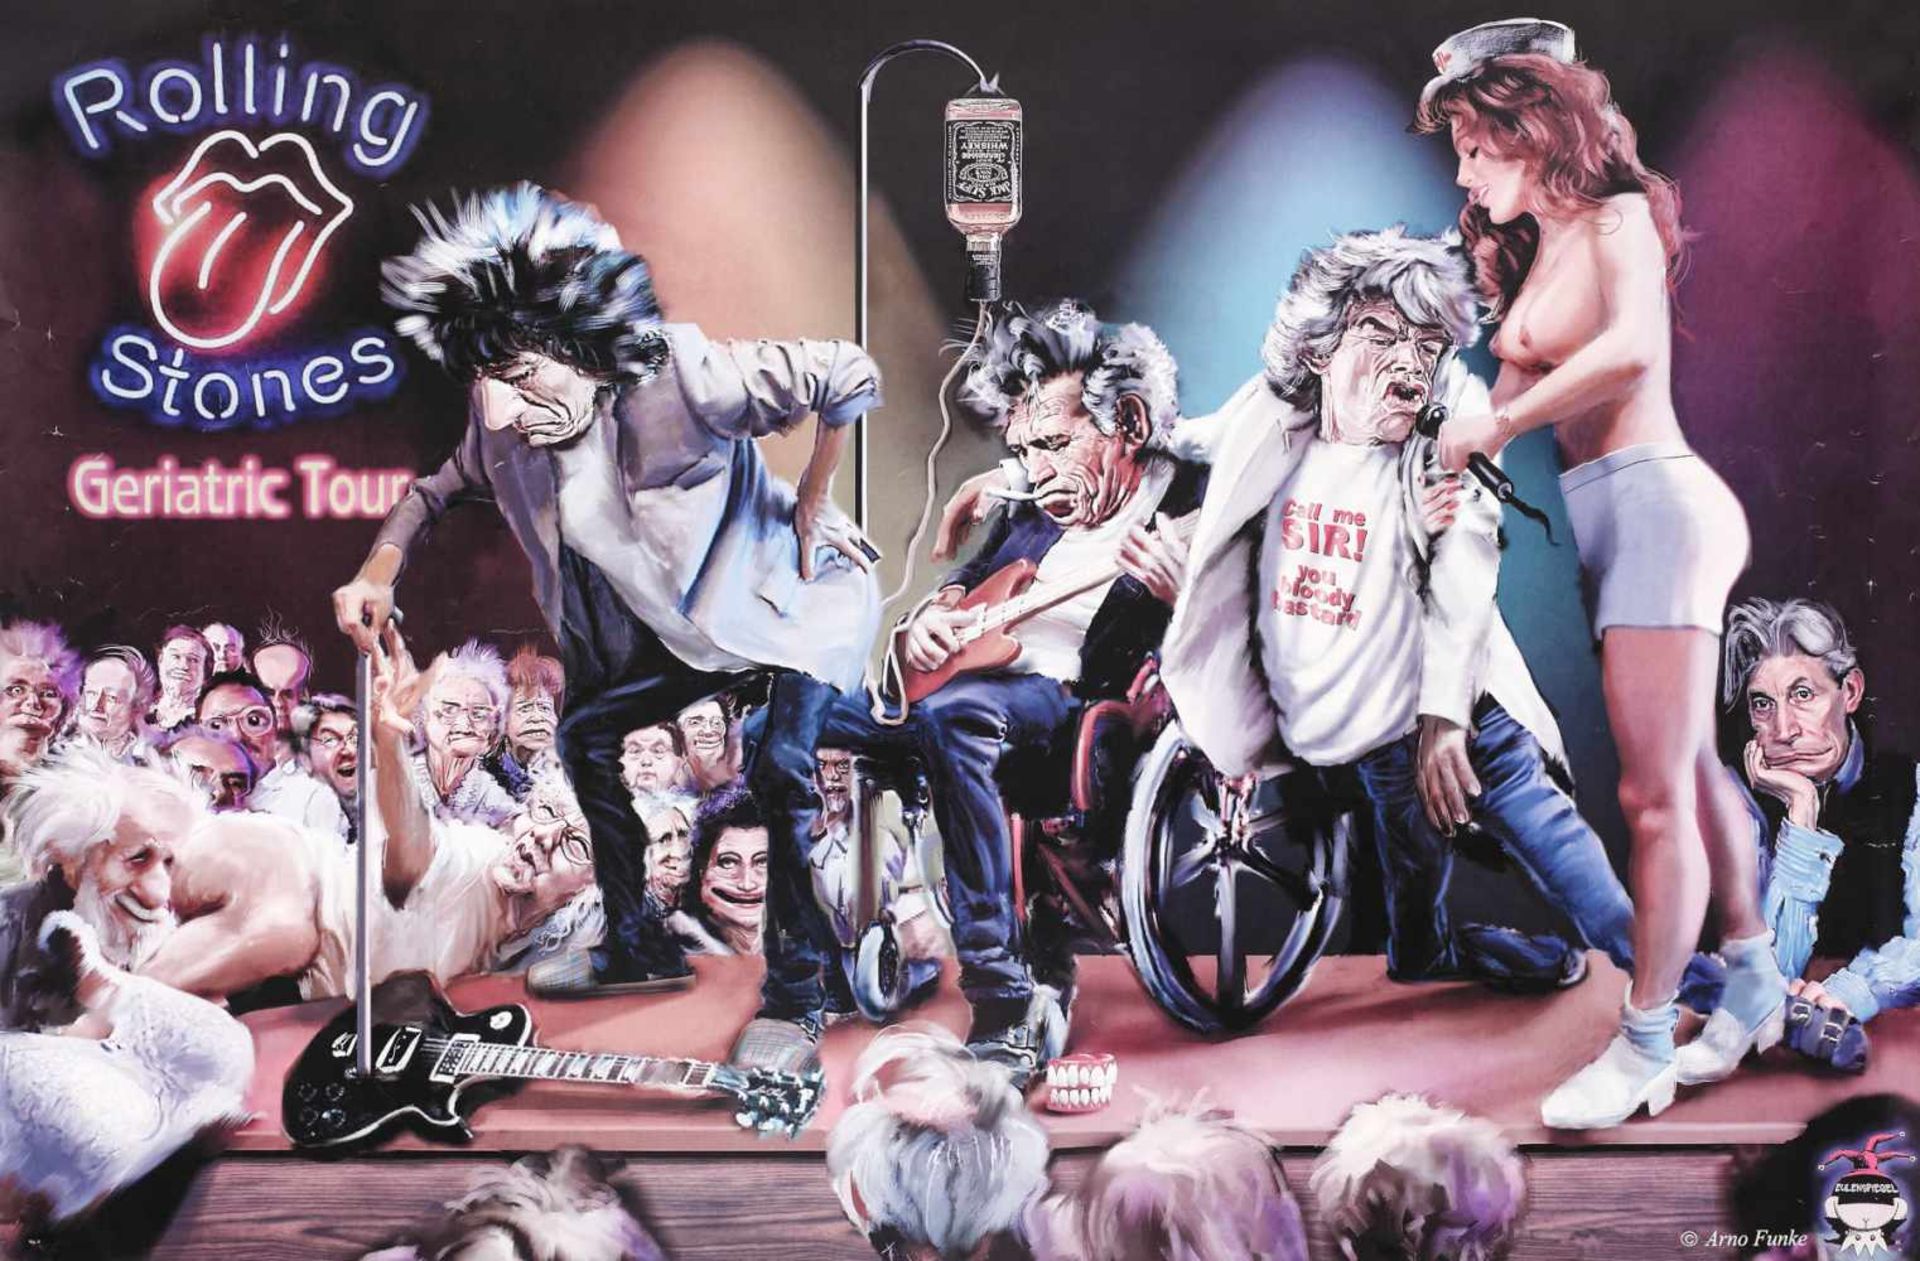 "The Rolling Stones - Geriatric tour" cartoon poster